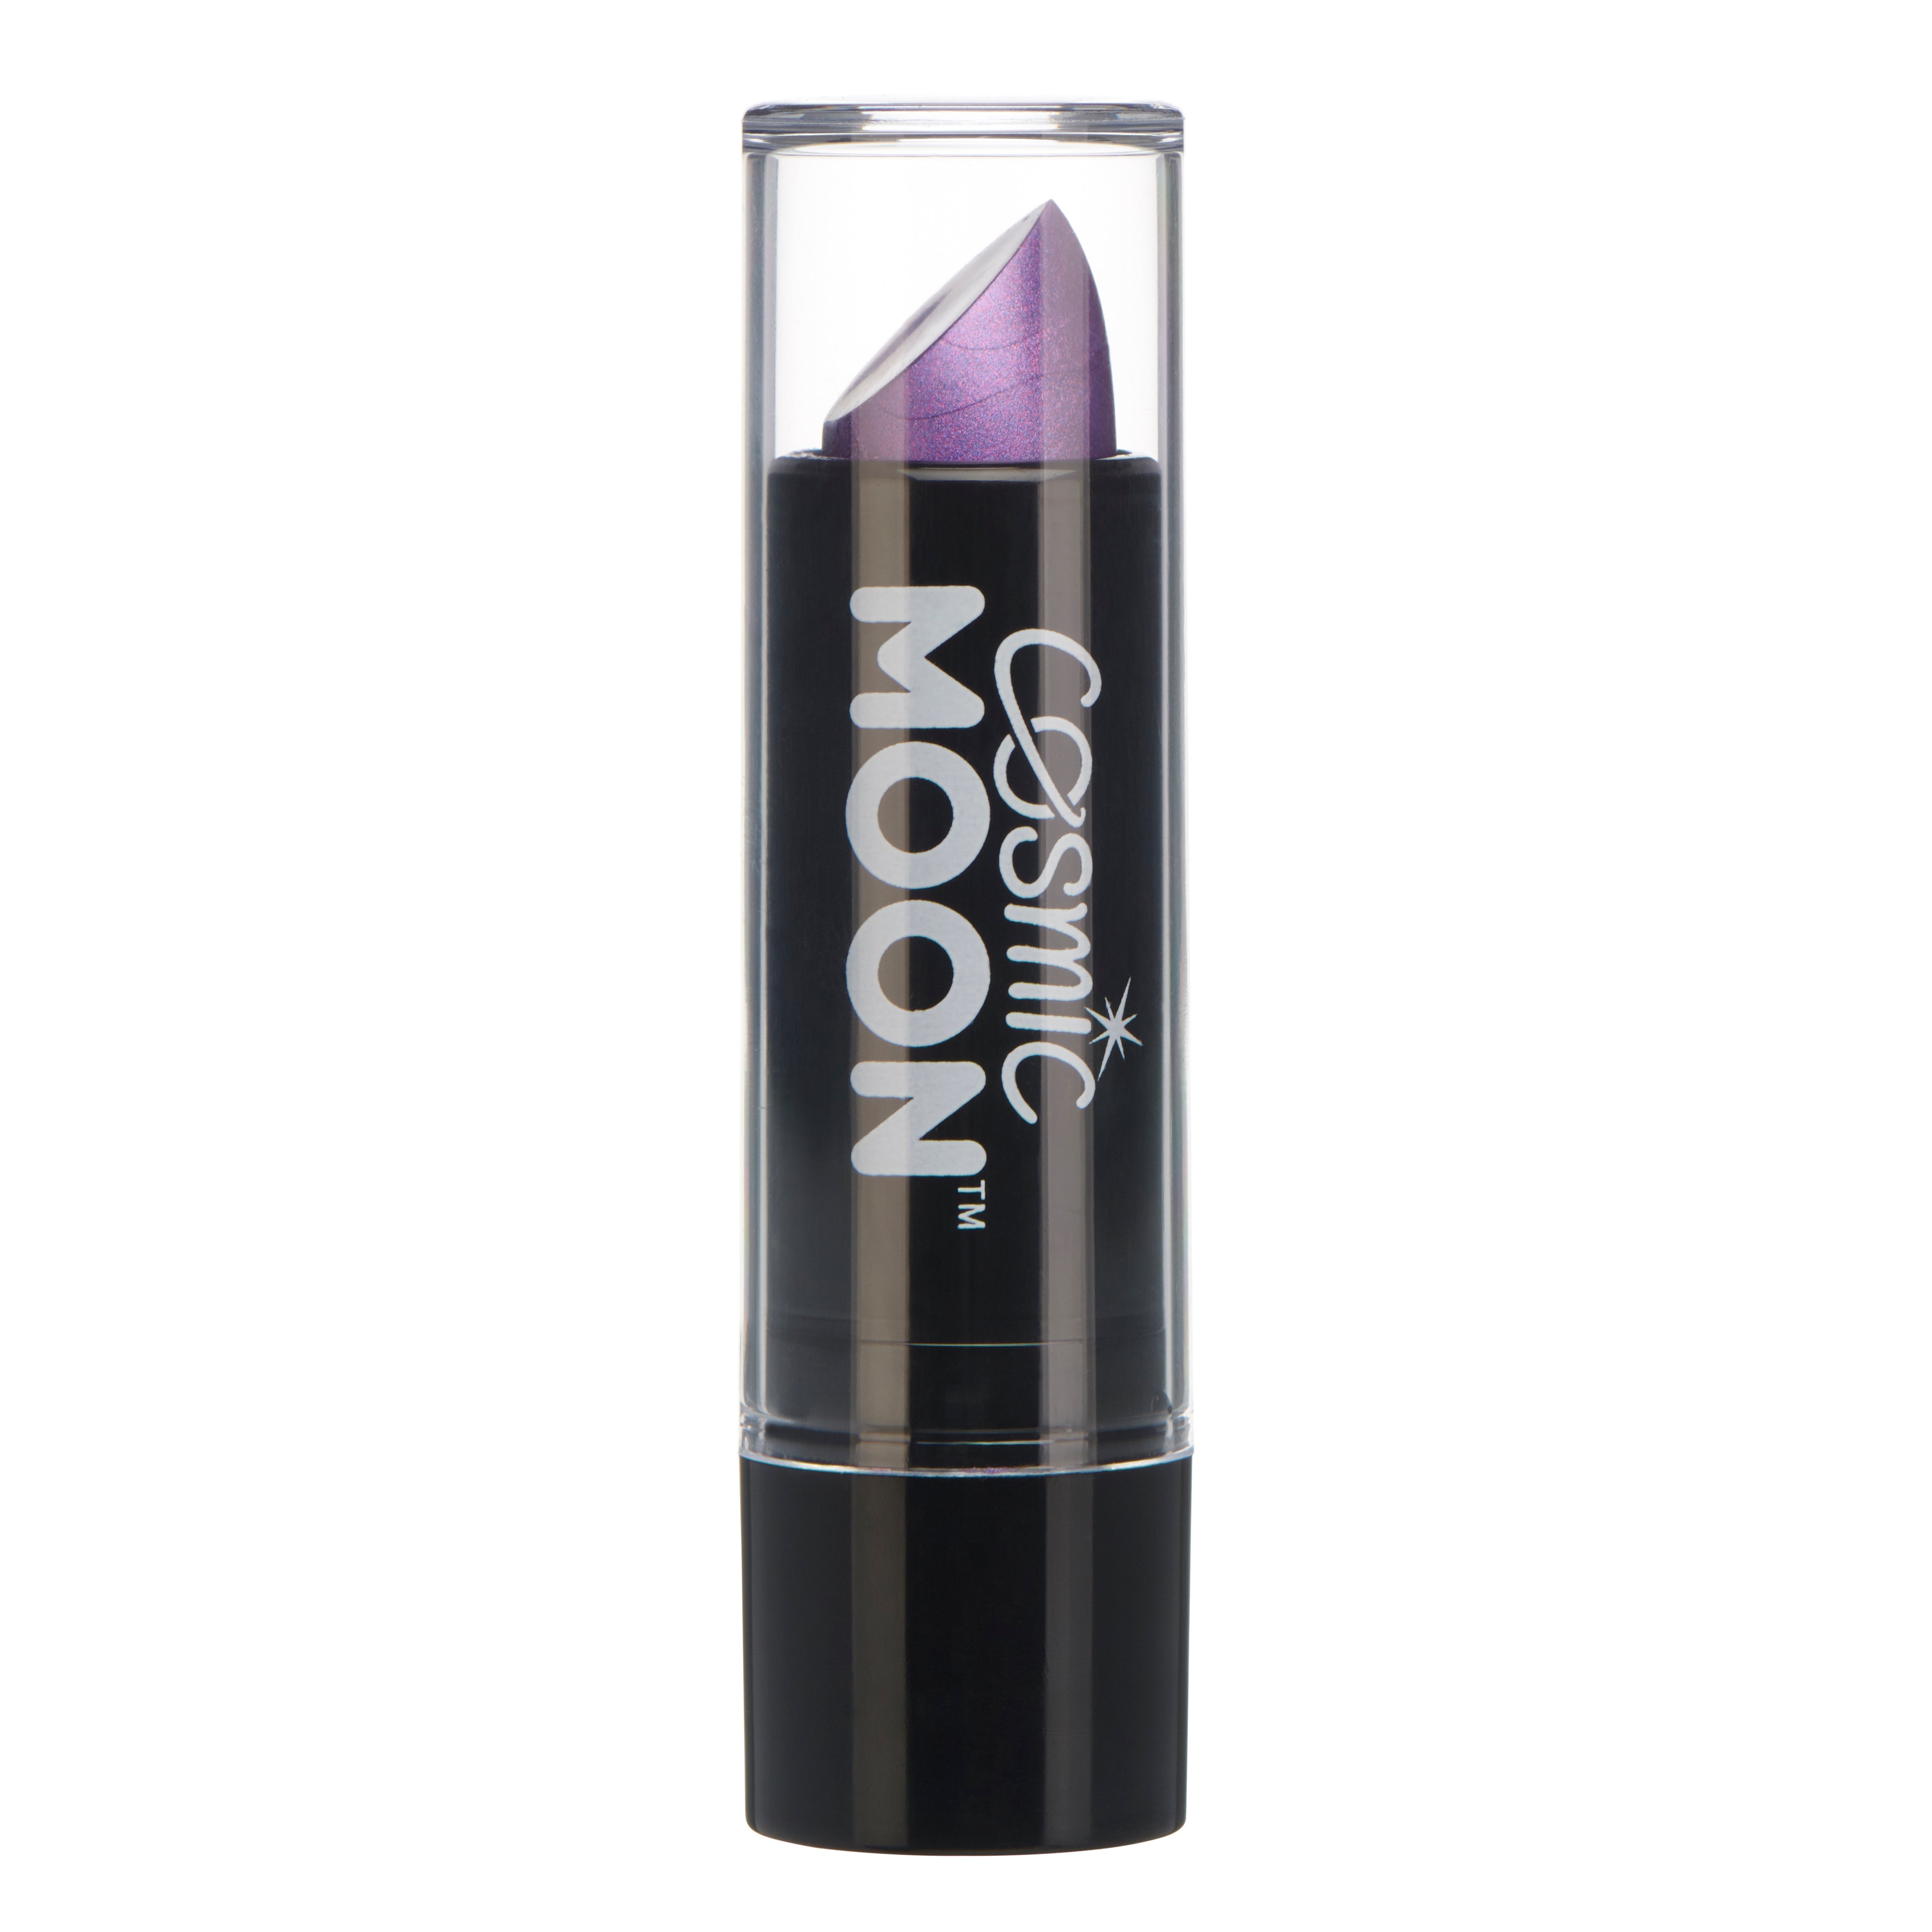 Purple - Metallic Lipstick, 5g. Cosmetically certified, FDA & Health Canada compliant and cruelty free.